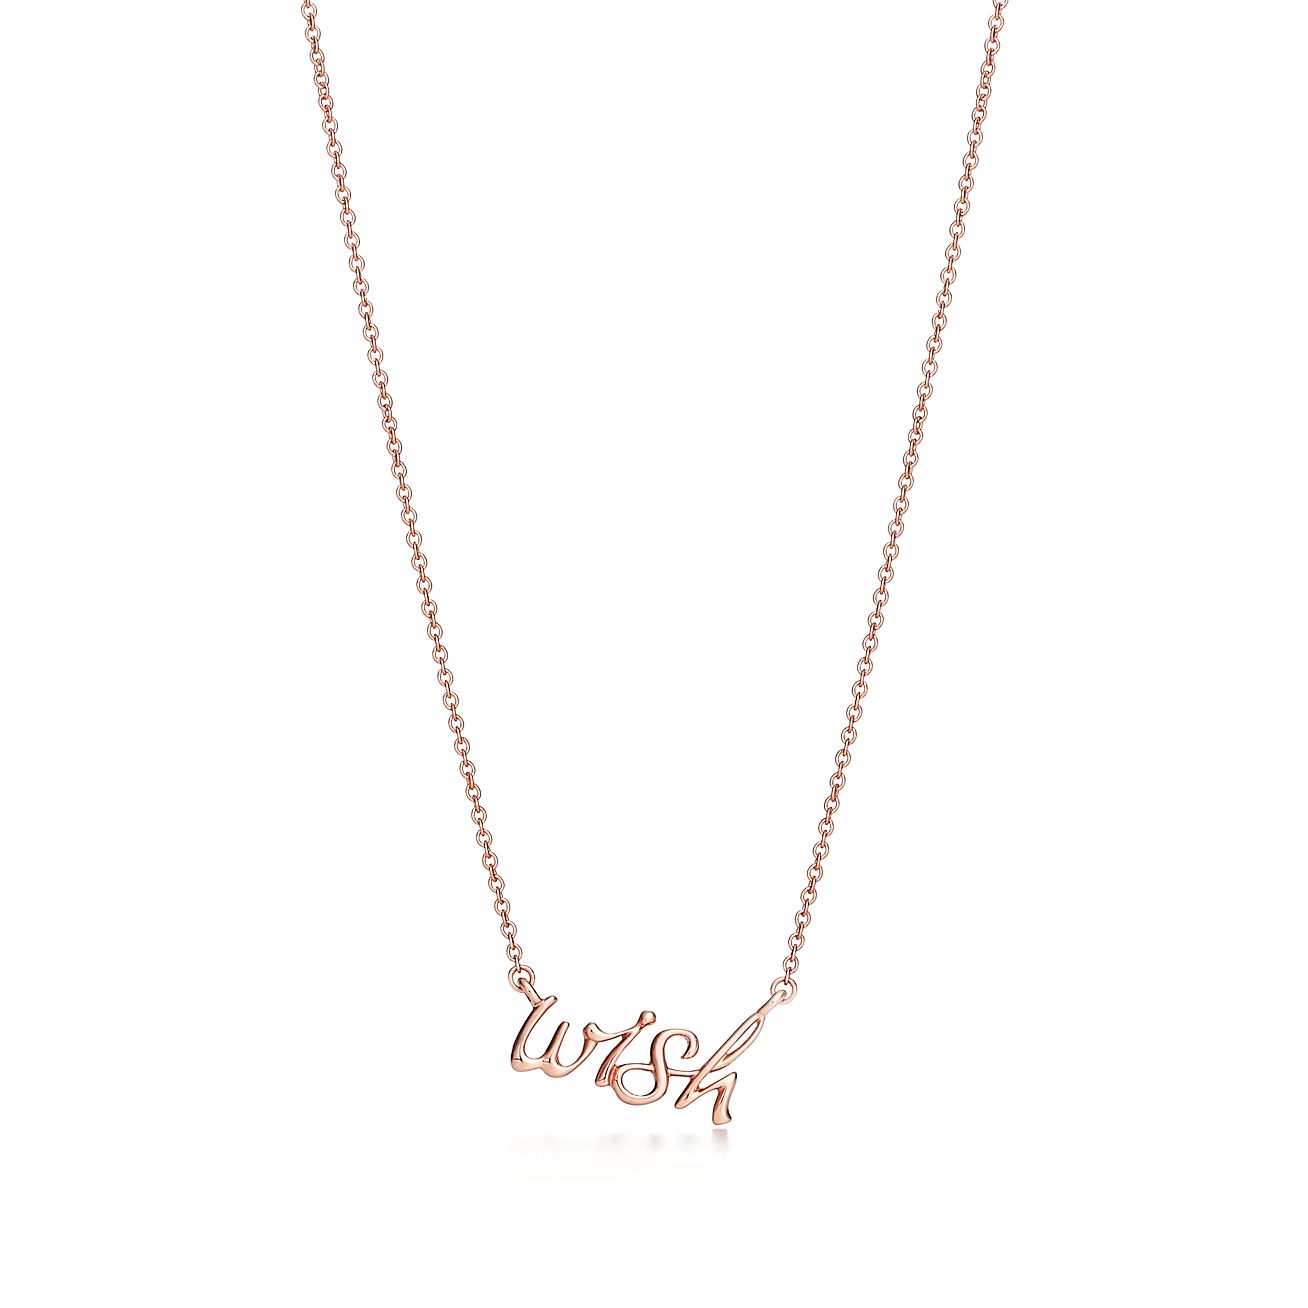 Paloma's Graffiti wish pendant in 18k rose gold. | Tiffany & Co.